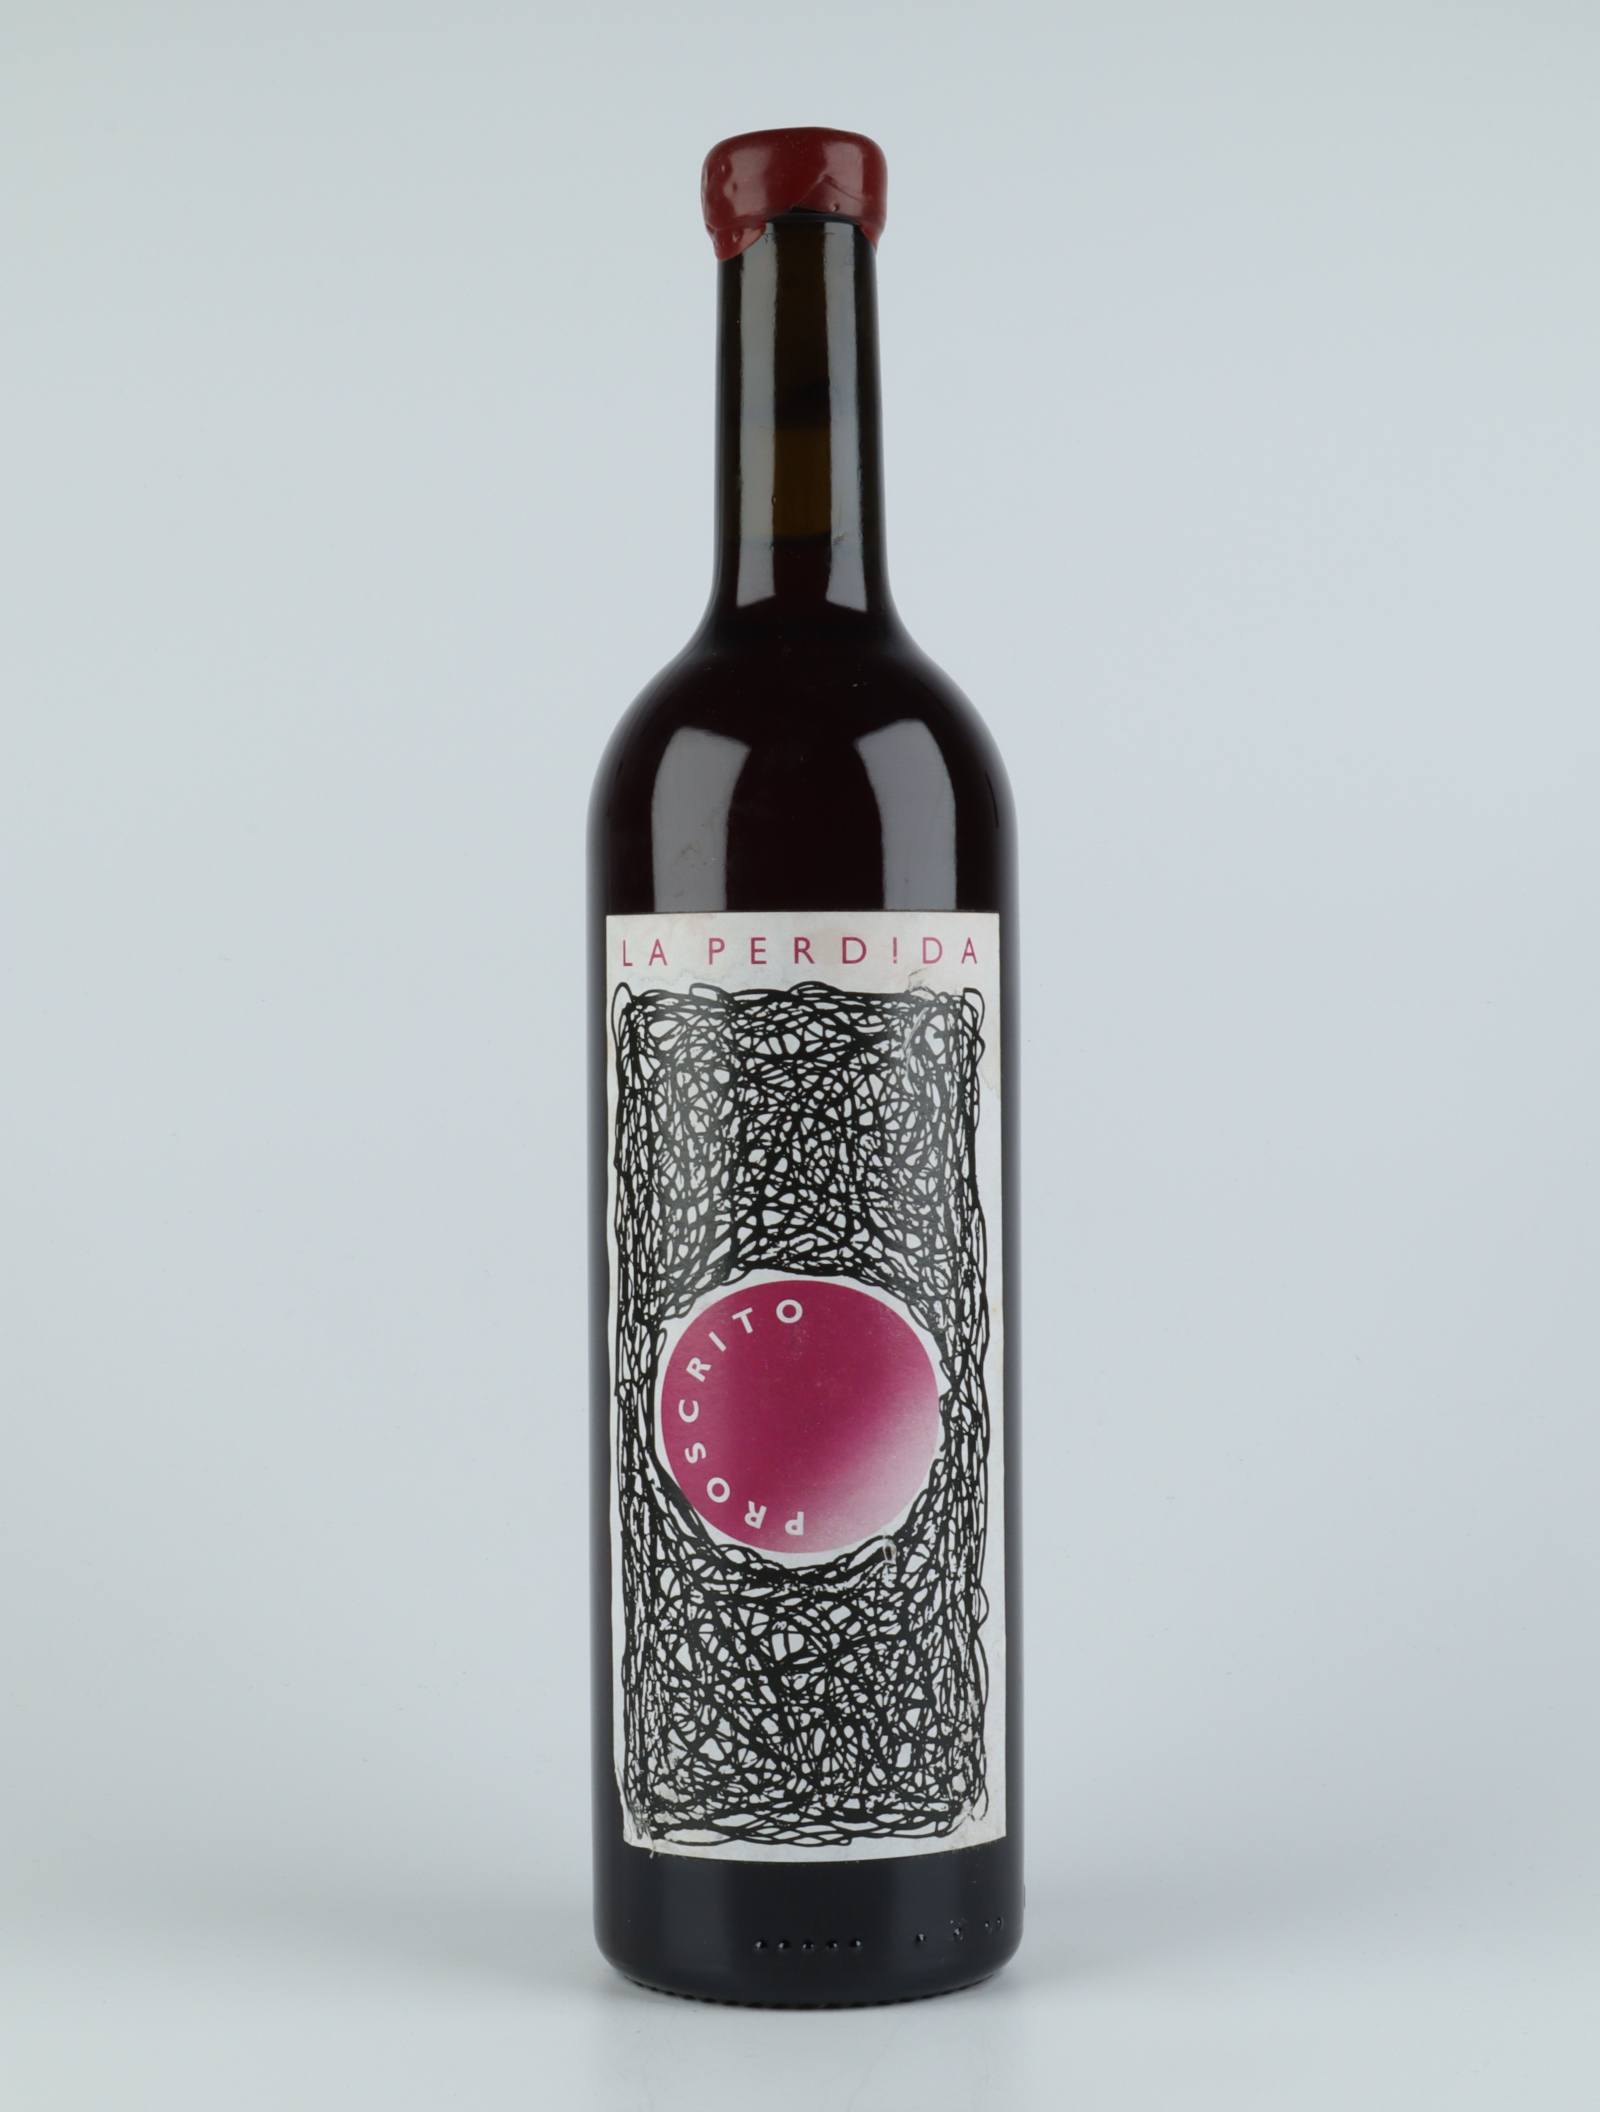 A bottle 2019 Proscrito Rosé from La Perdida, Ribeira Sacra in Spain